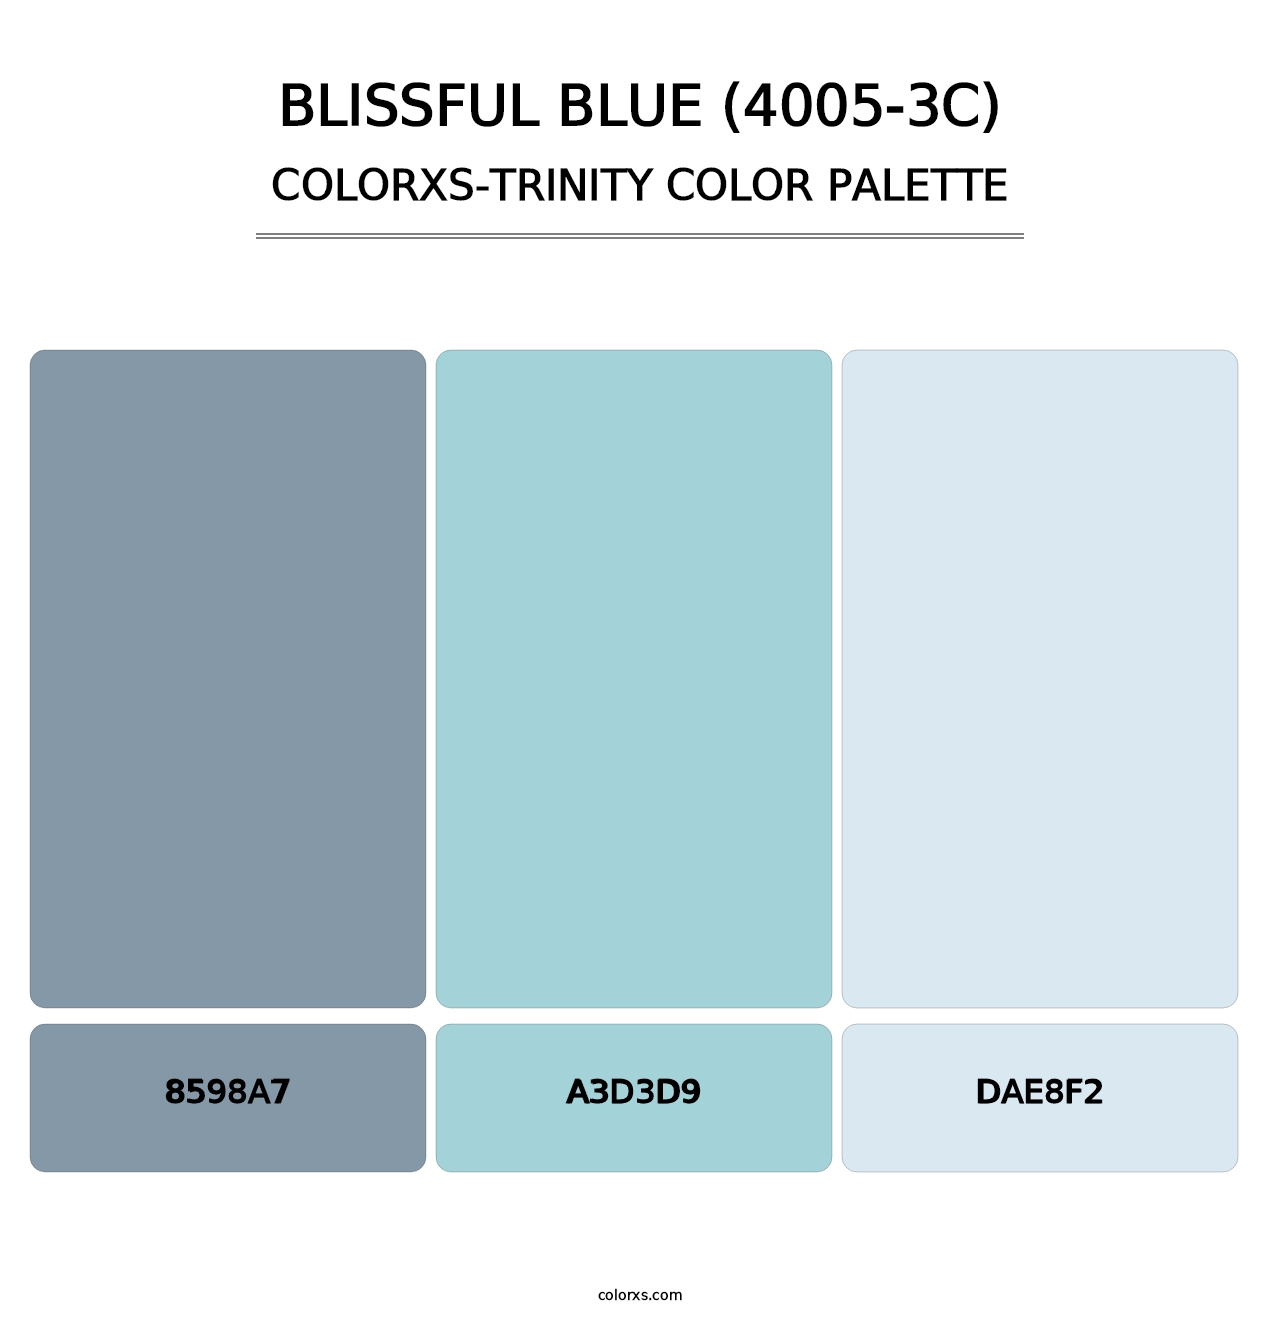 Blissful Blue (4005-3C) - Colorxs Trinity Palette